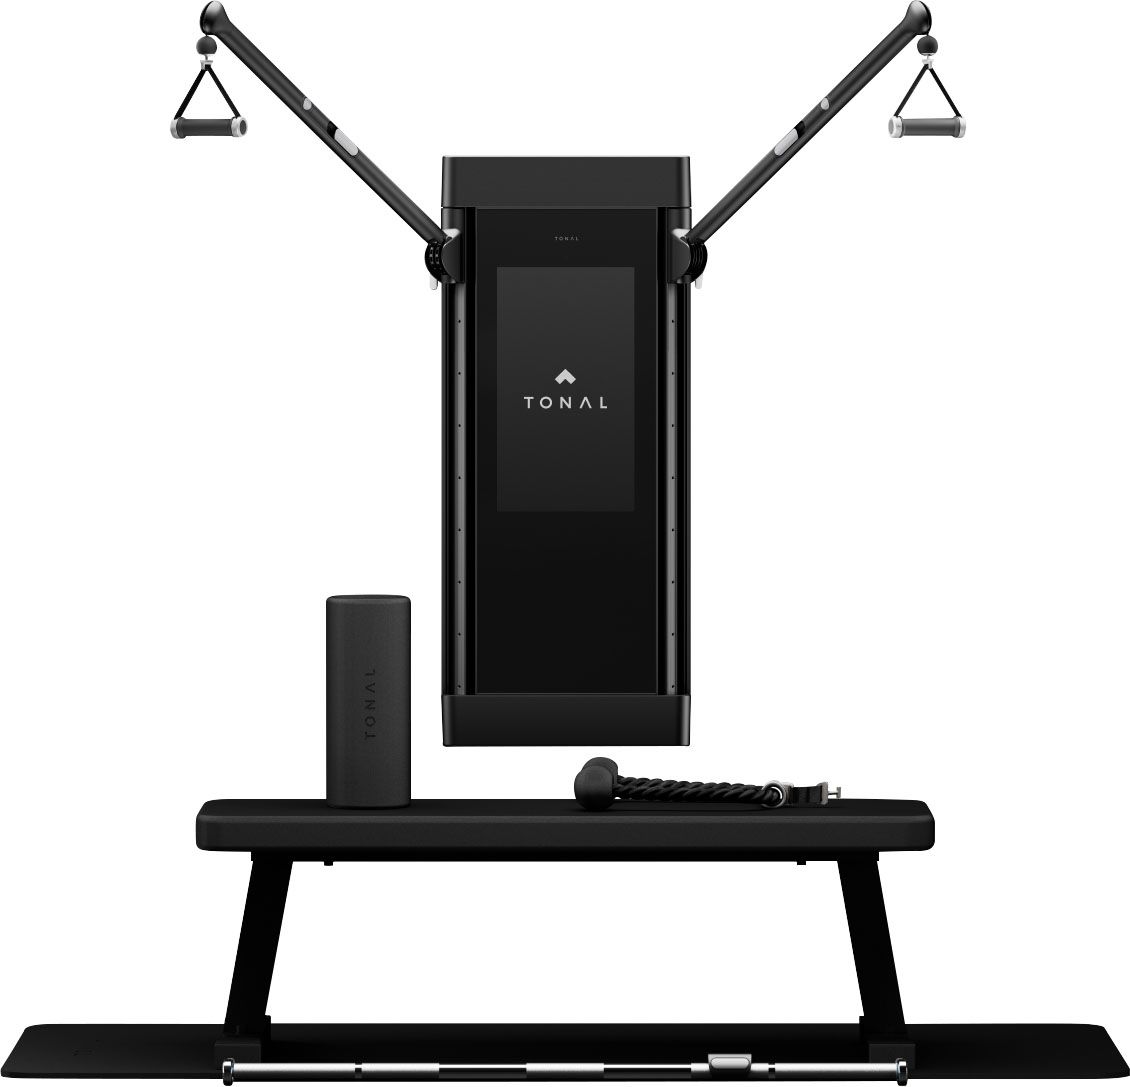 Tonal Intelligent Home Gym System Black 155-0001 - Best Buy | Best Buy U.S.